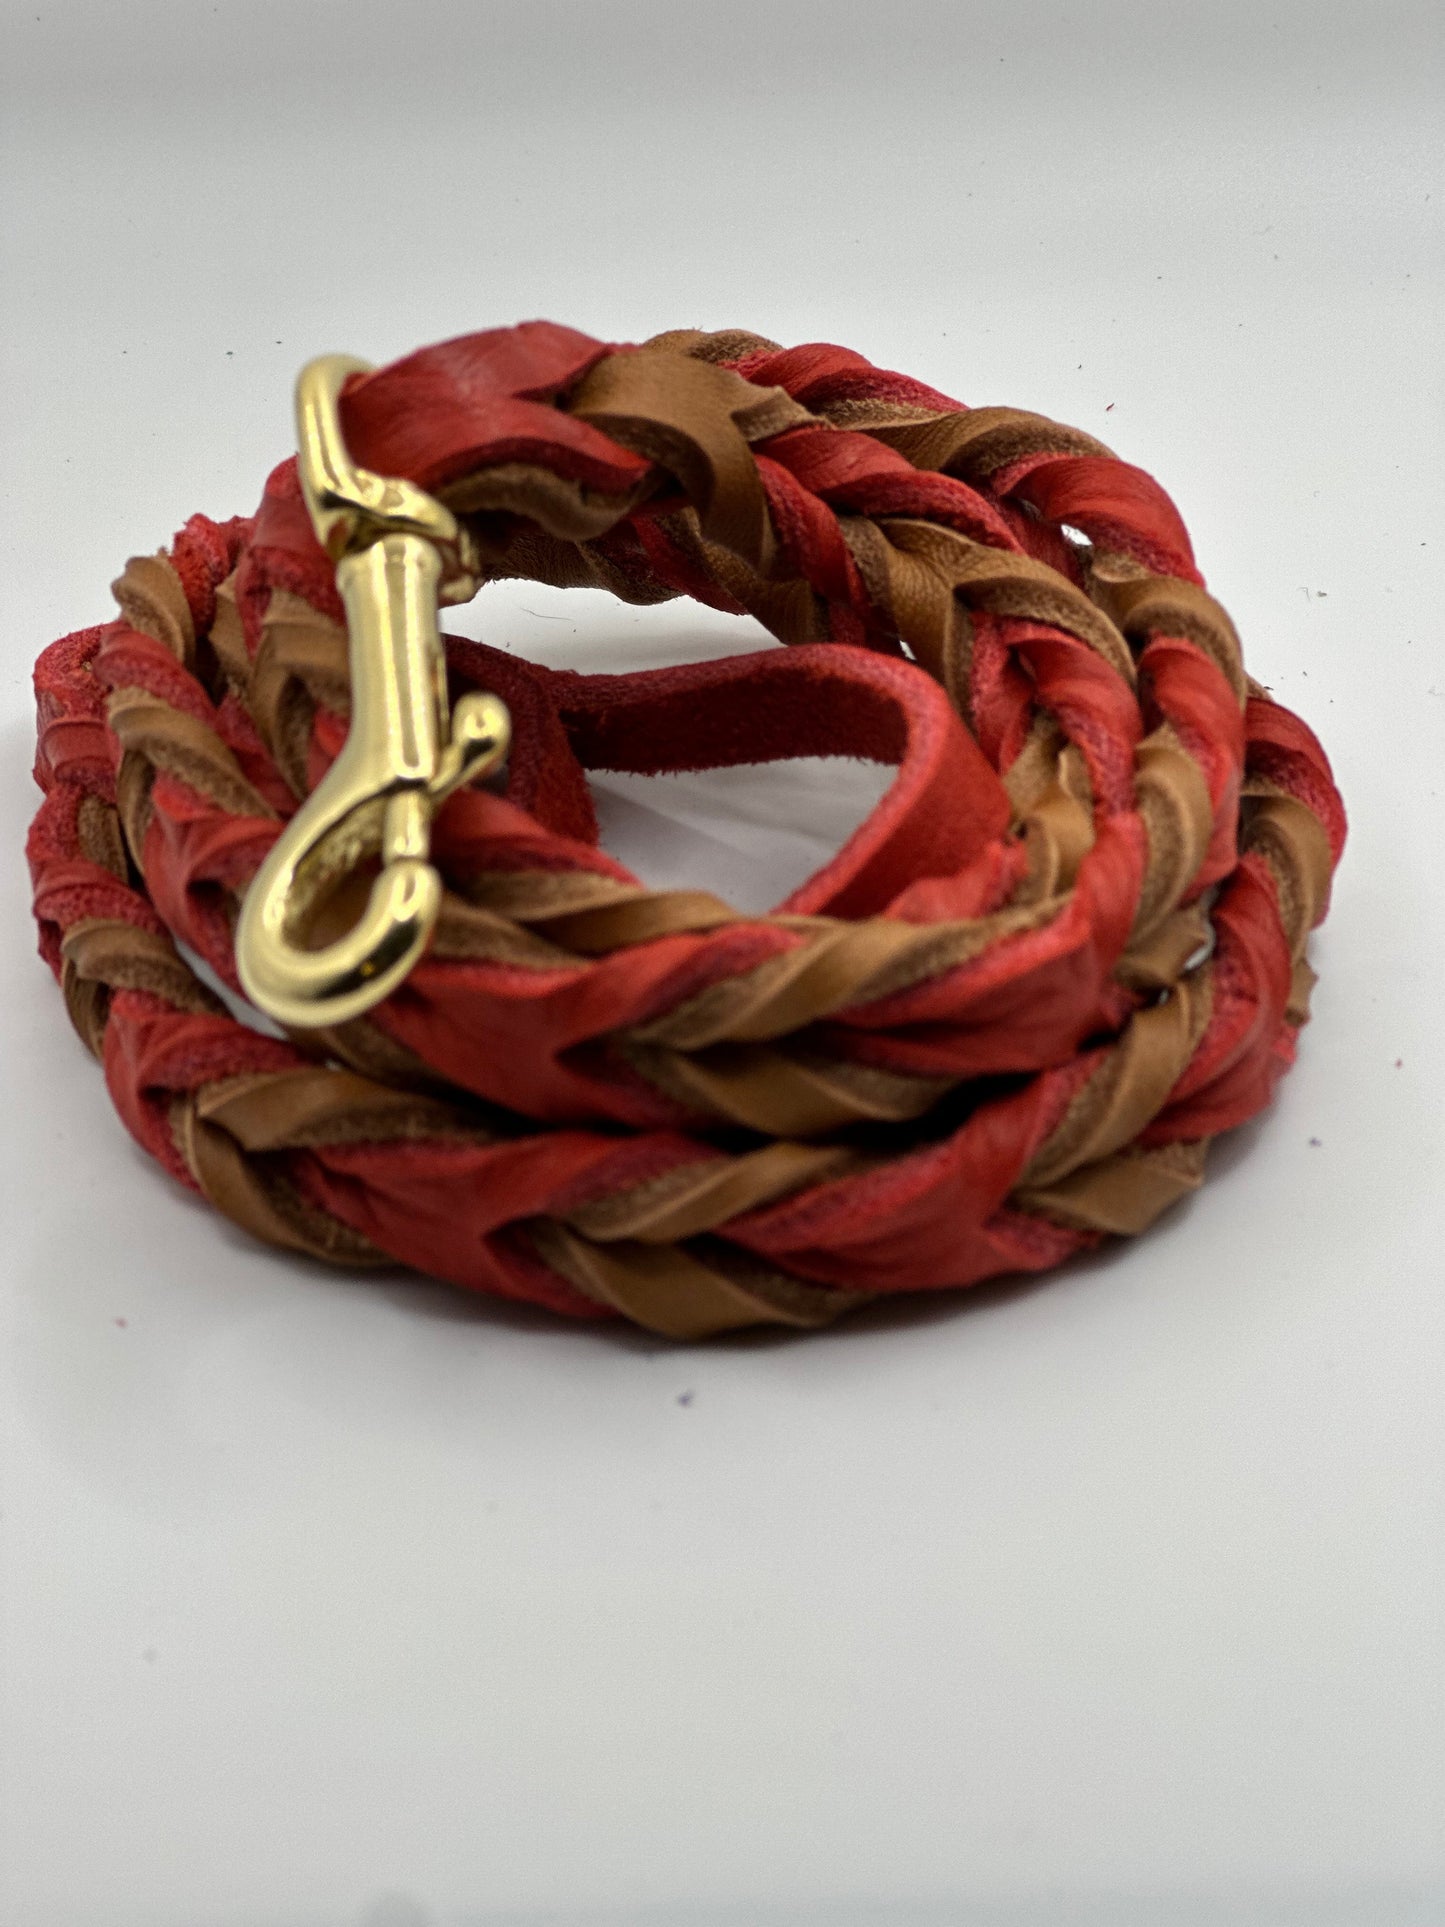 3/8” Bullhide braided leather leash